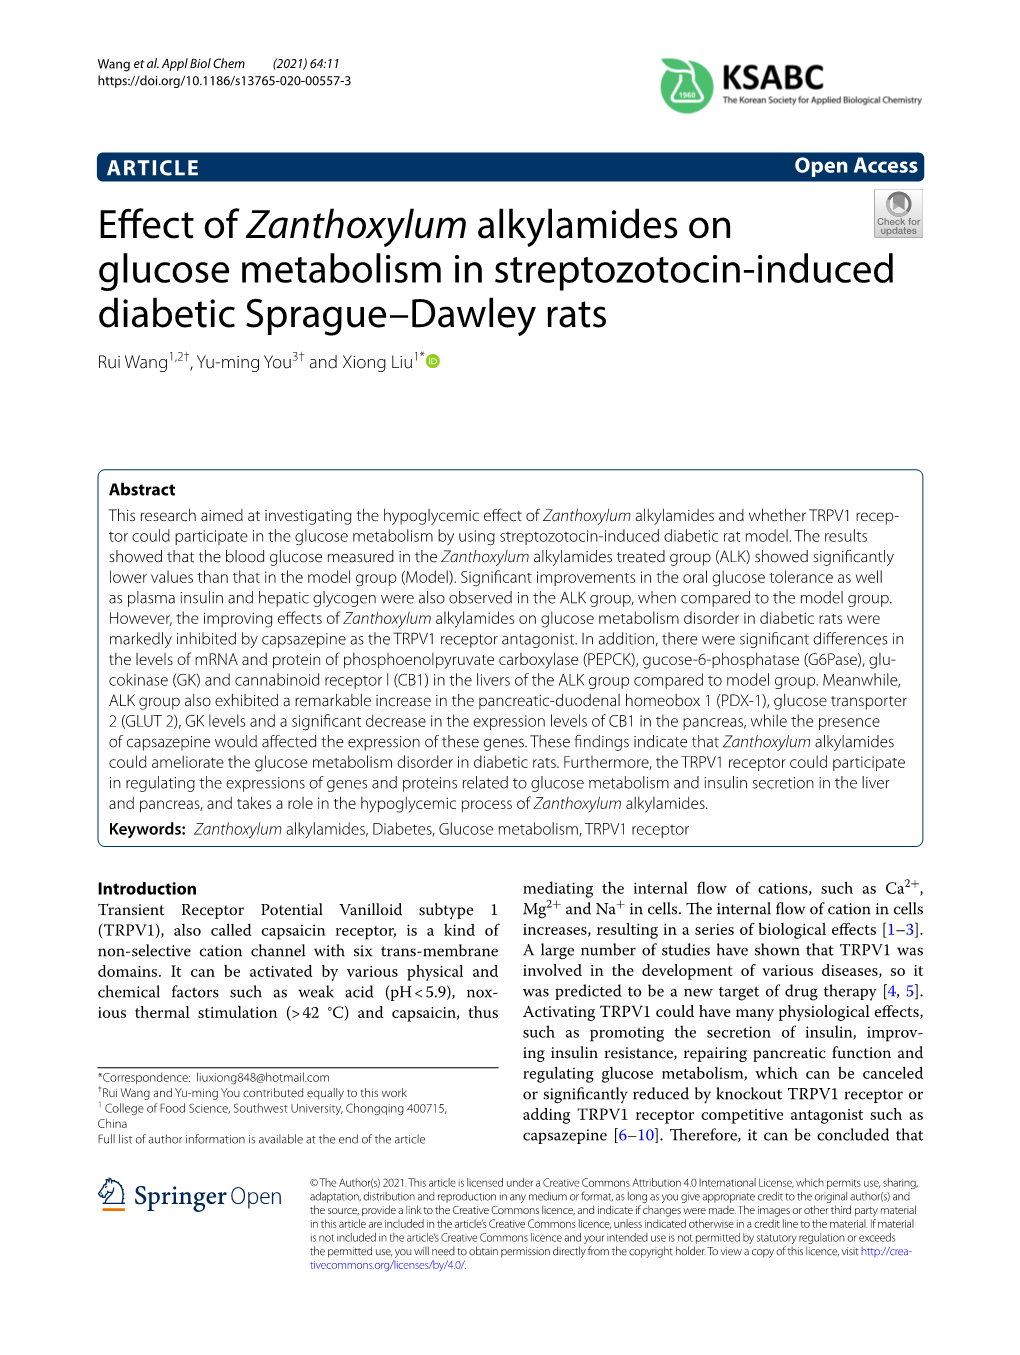 Effect of Zanthoxylum Alkylamides on Glucose Metabolism In